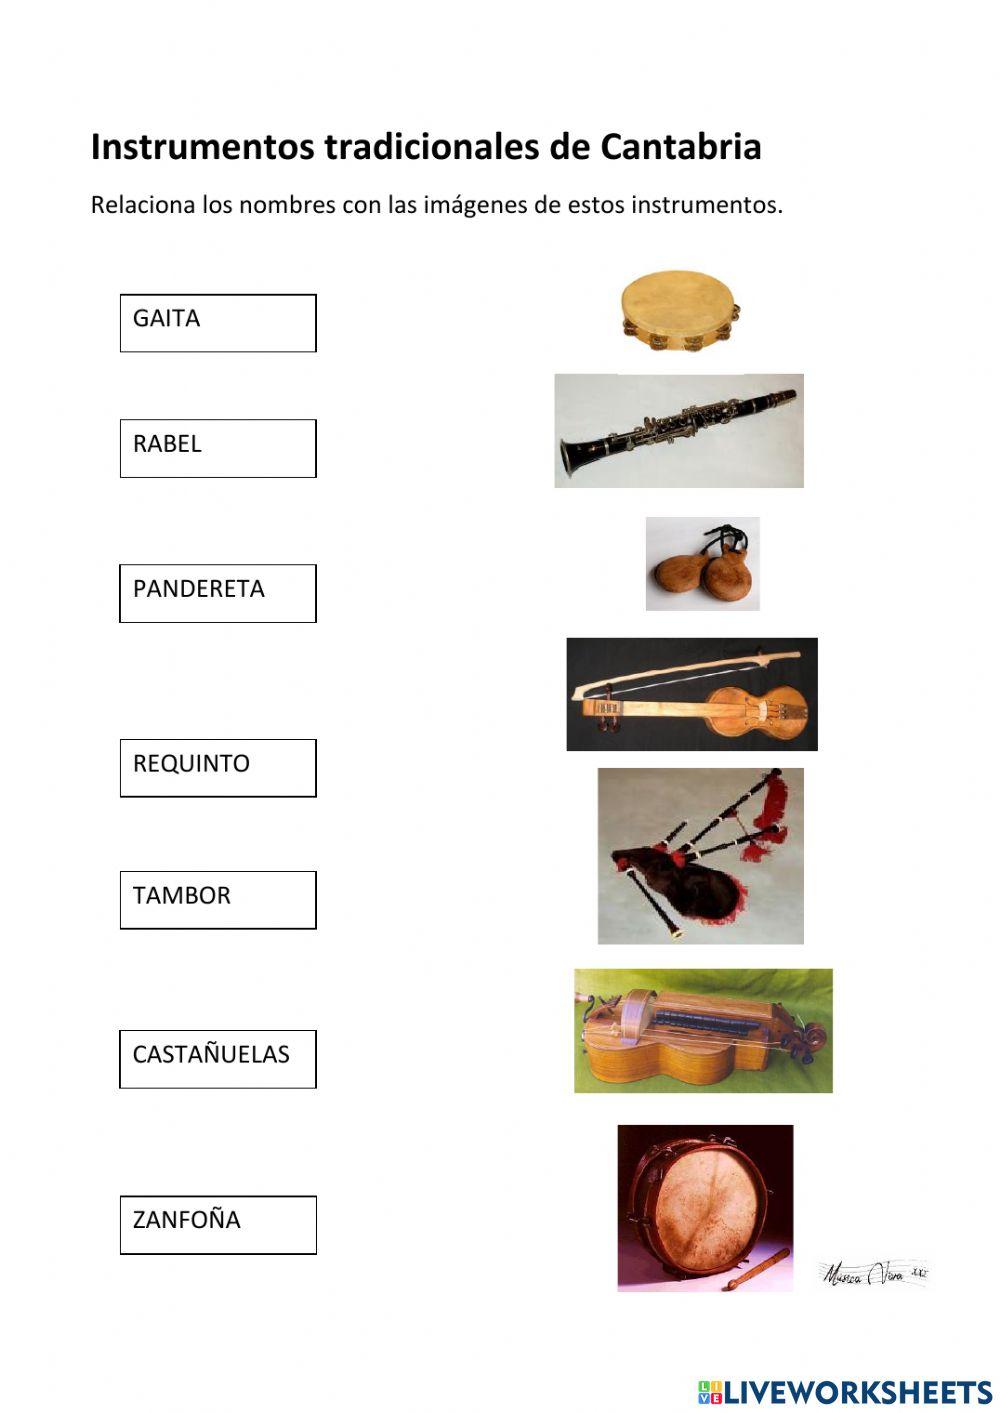 Instrumentos Musicales del Folclore de Cantabria worksheet | Live Worksheets